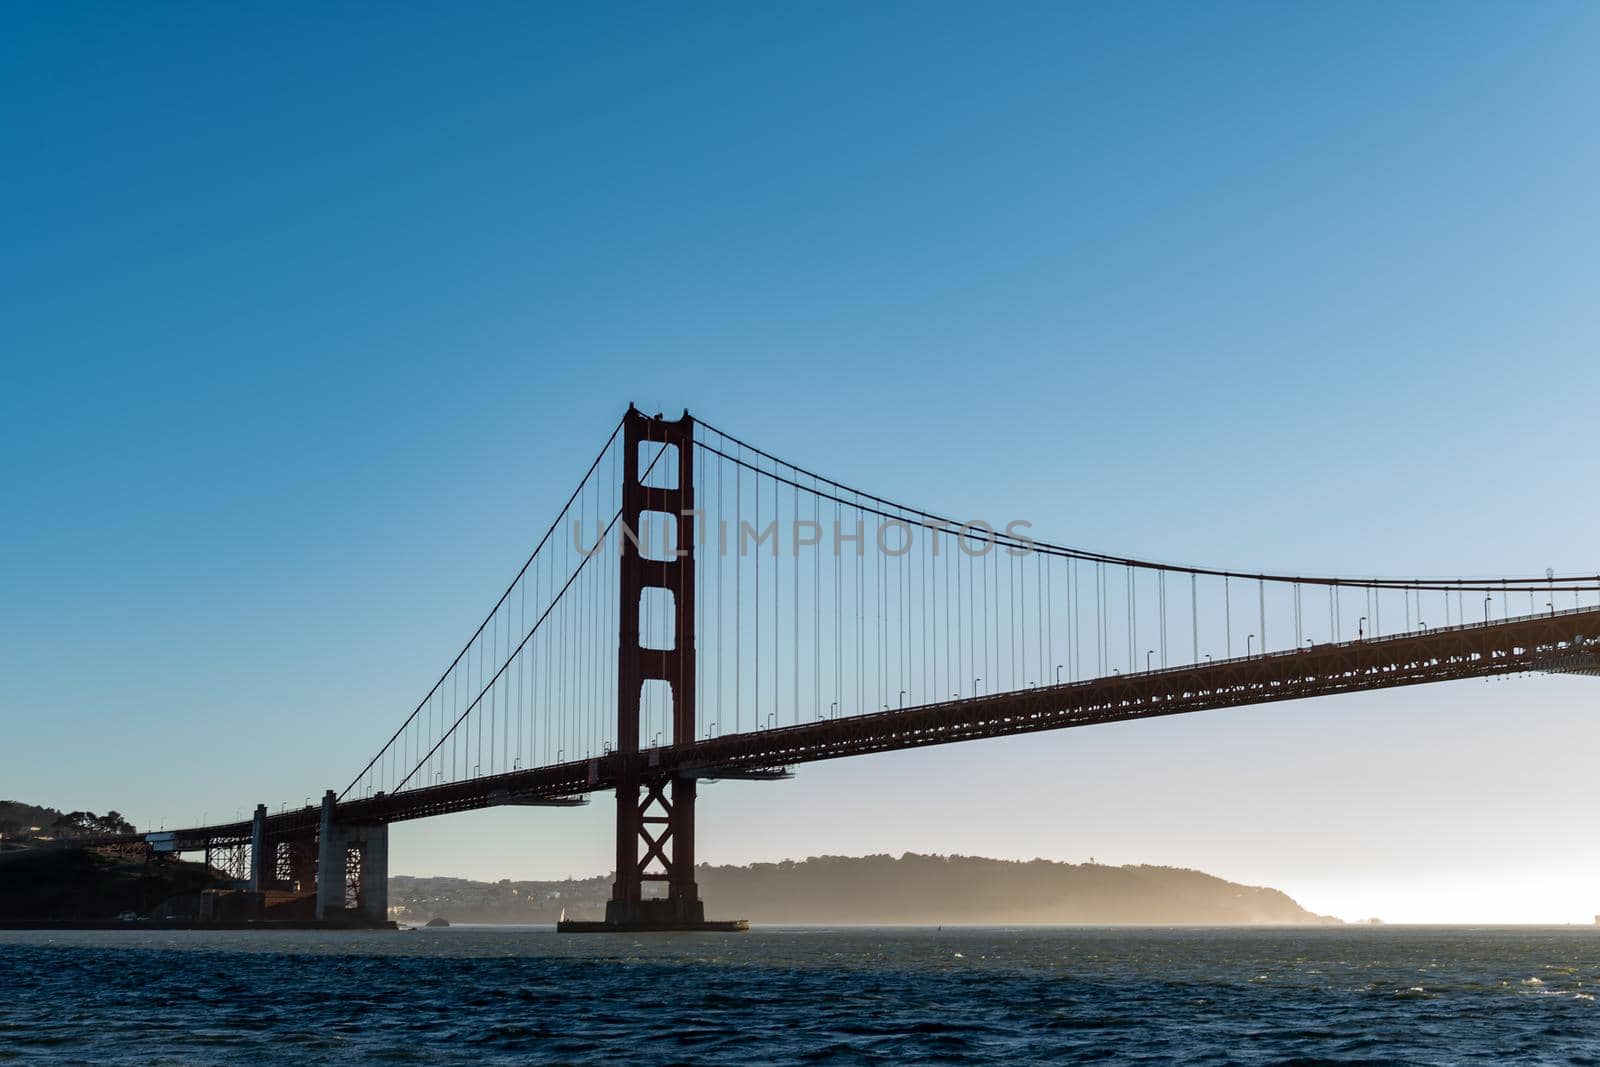 Famous Golden Gate Bridge in San Francisco California USA. The Golden Gate Bridge is a suspension bridge spanning the Golden Gate connecting San Francisco bay and pacific ocean by billroque